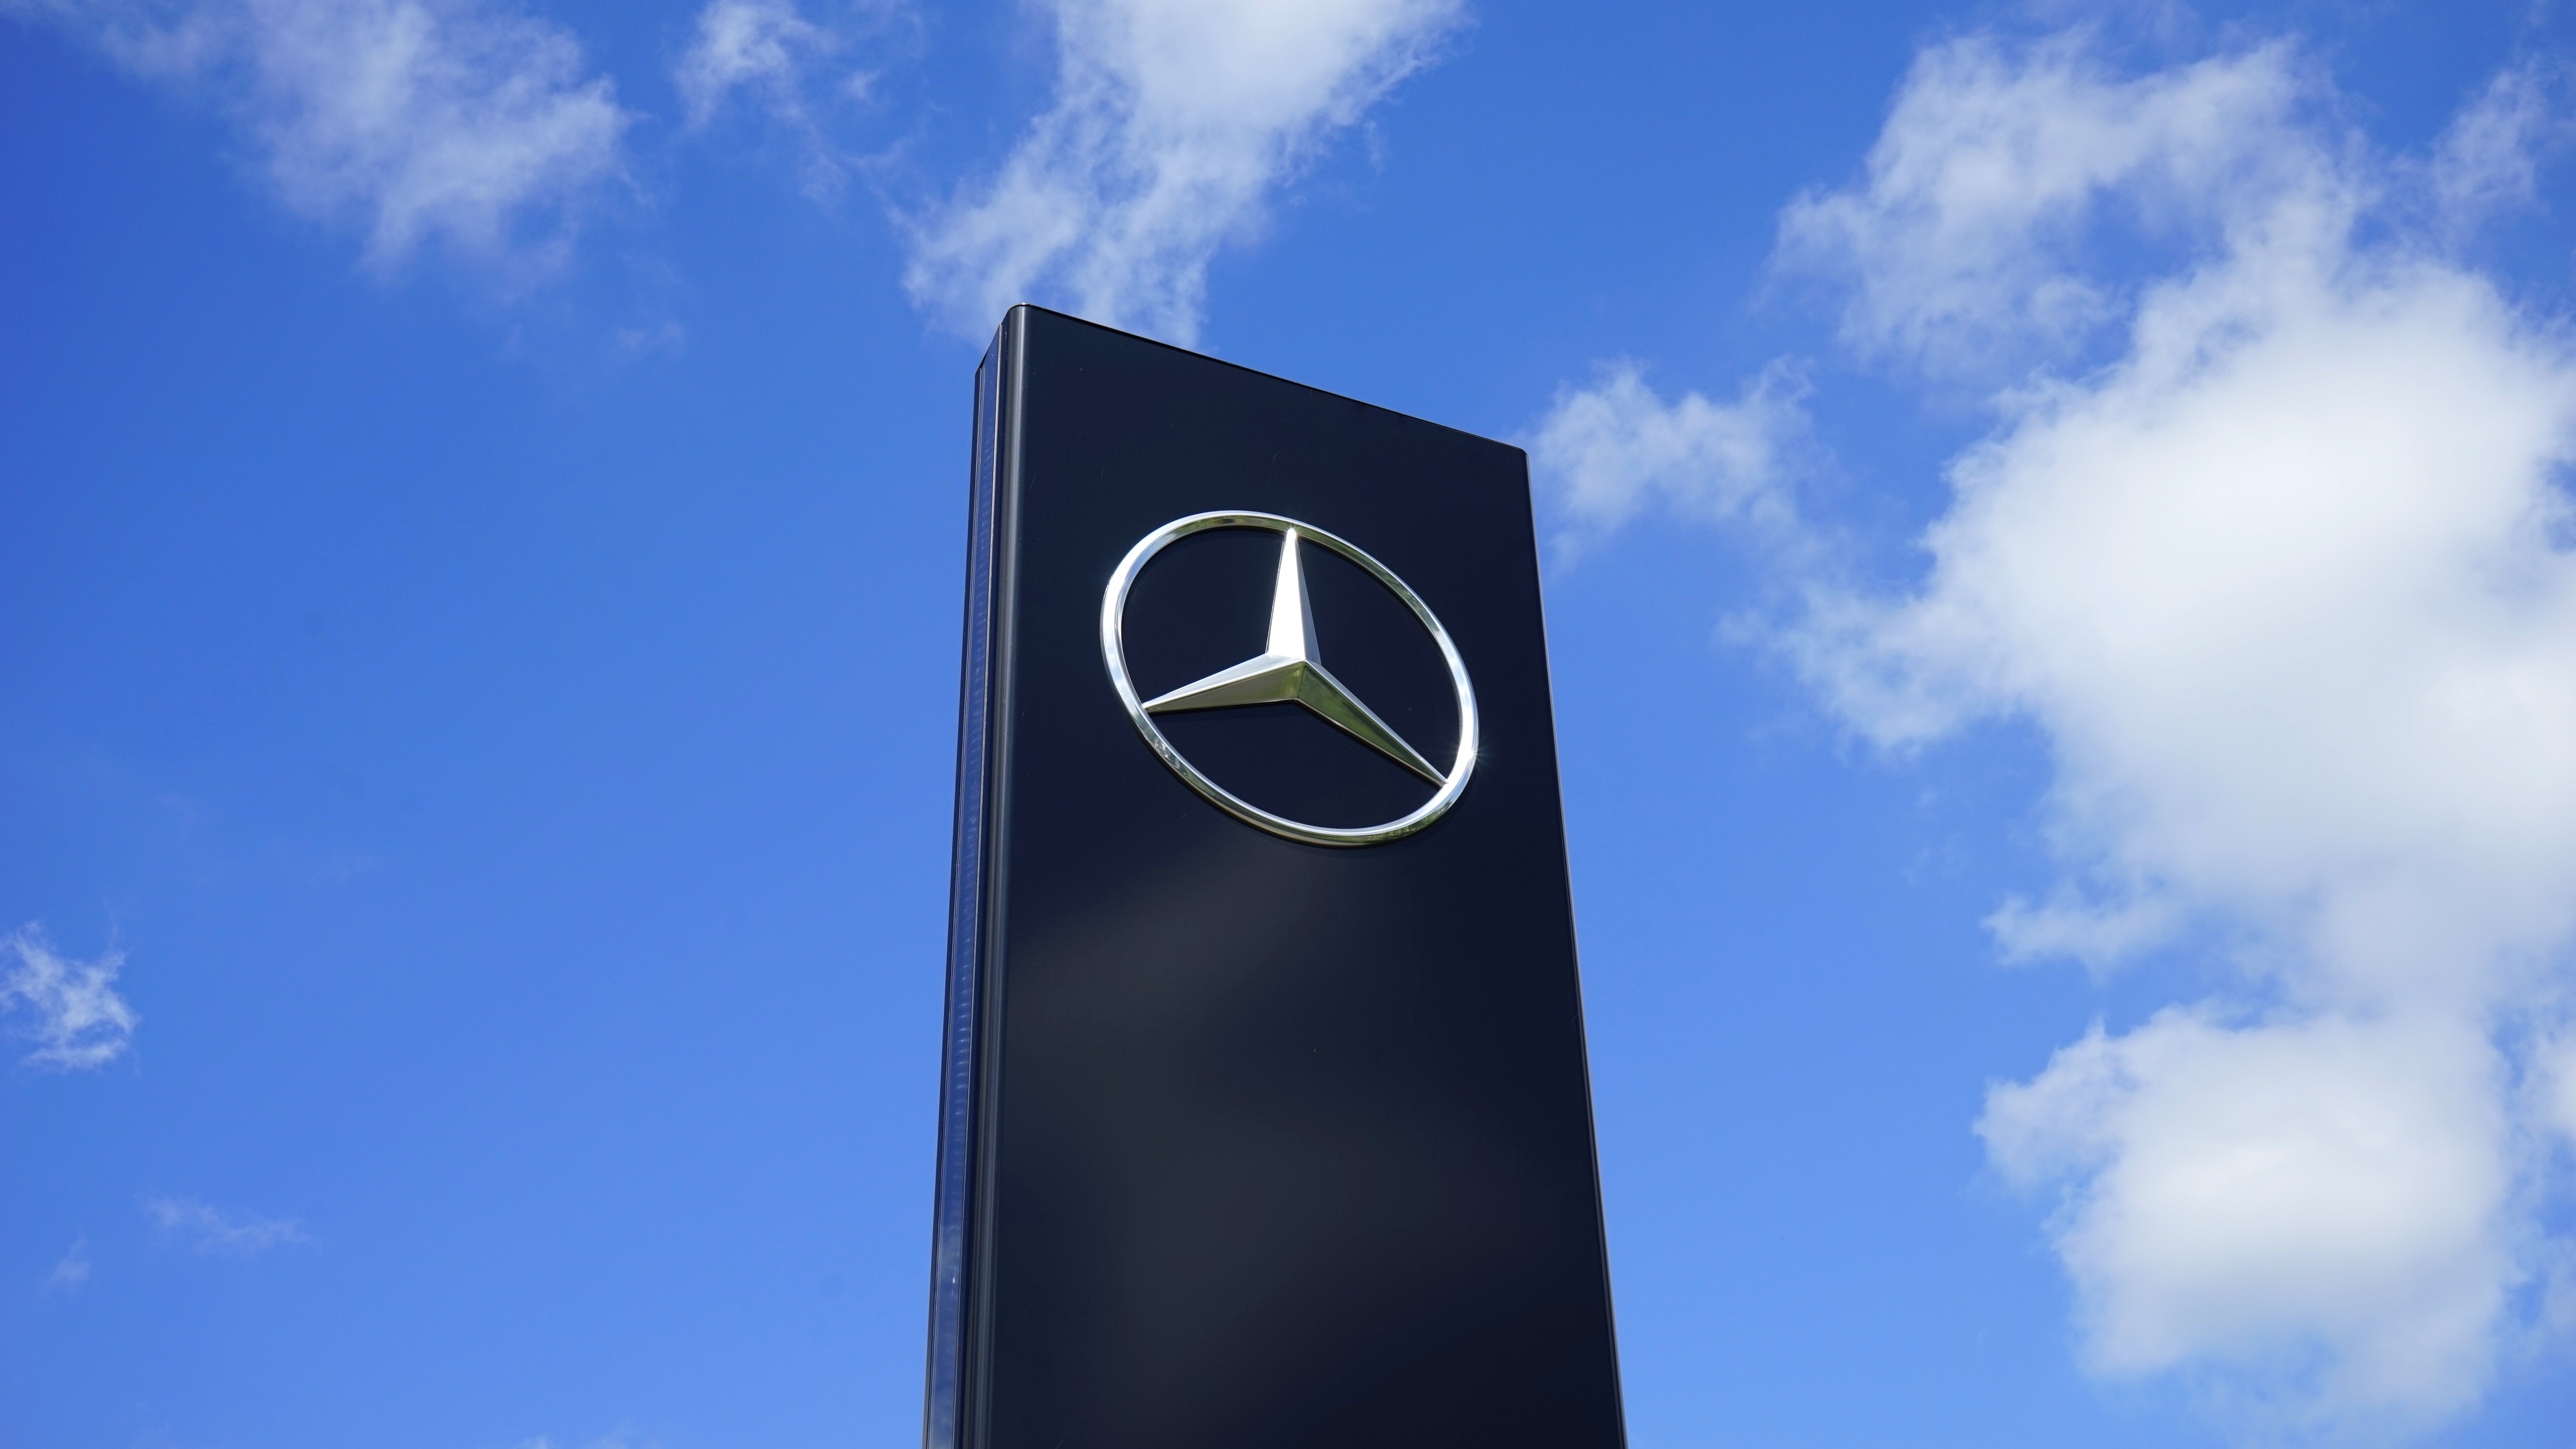 Webloyalty discusses Mercedes as a digital innovation